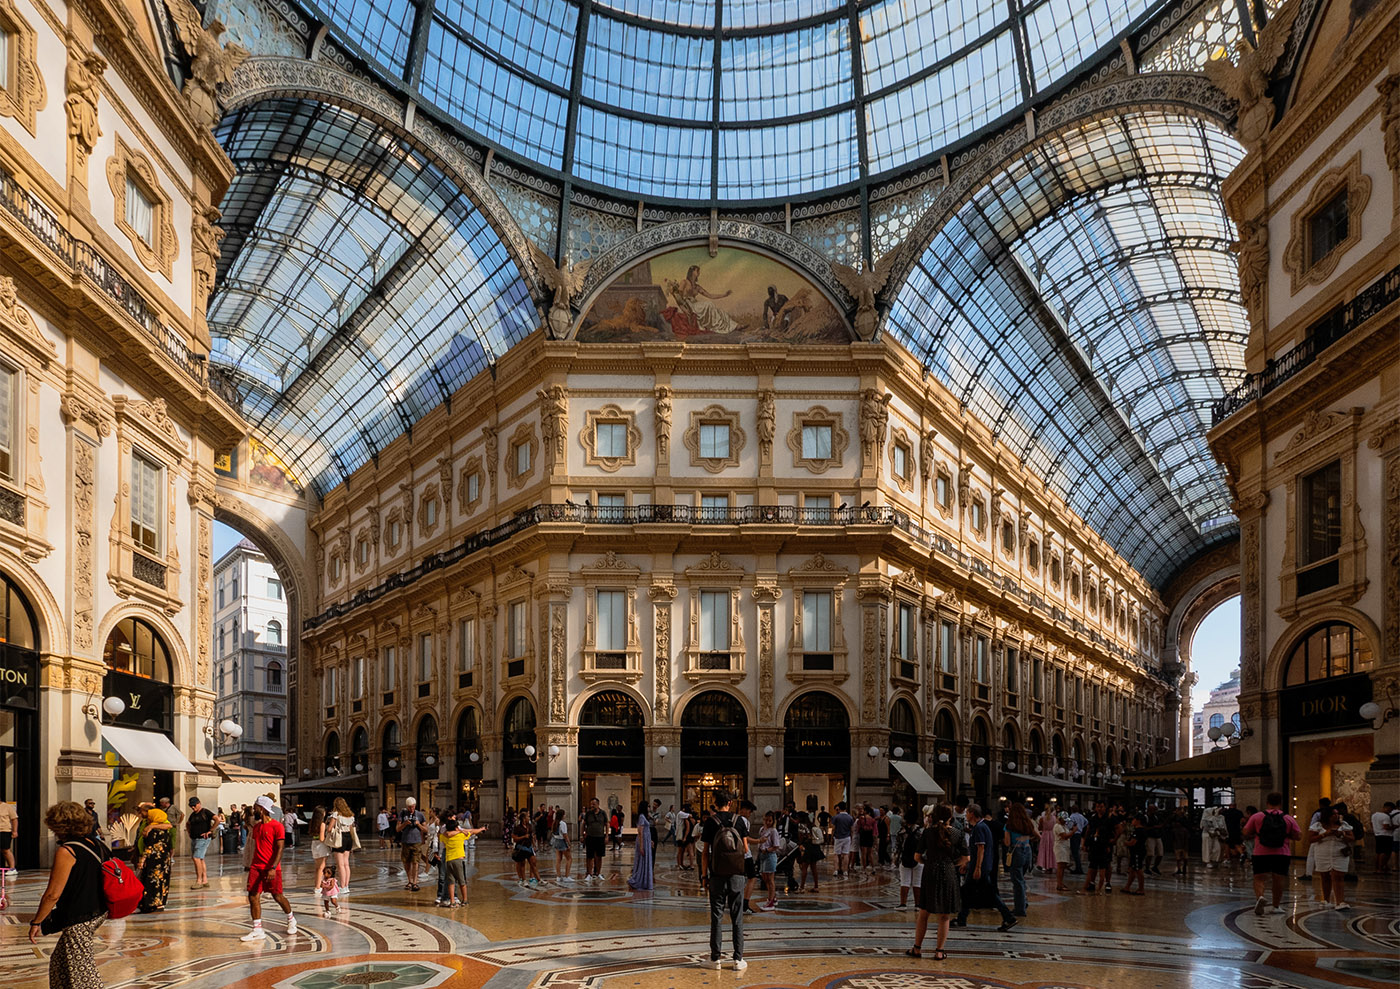 Galleria Vittorio Emanuele Ii, Milan: How To Reach, Best Time & Tips